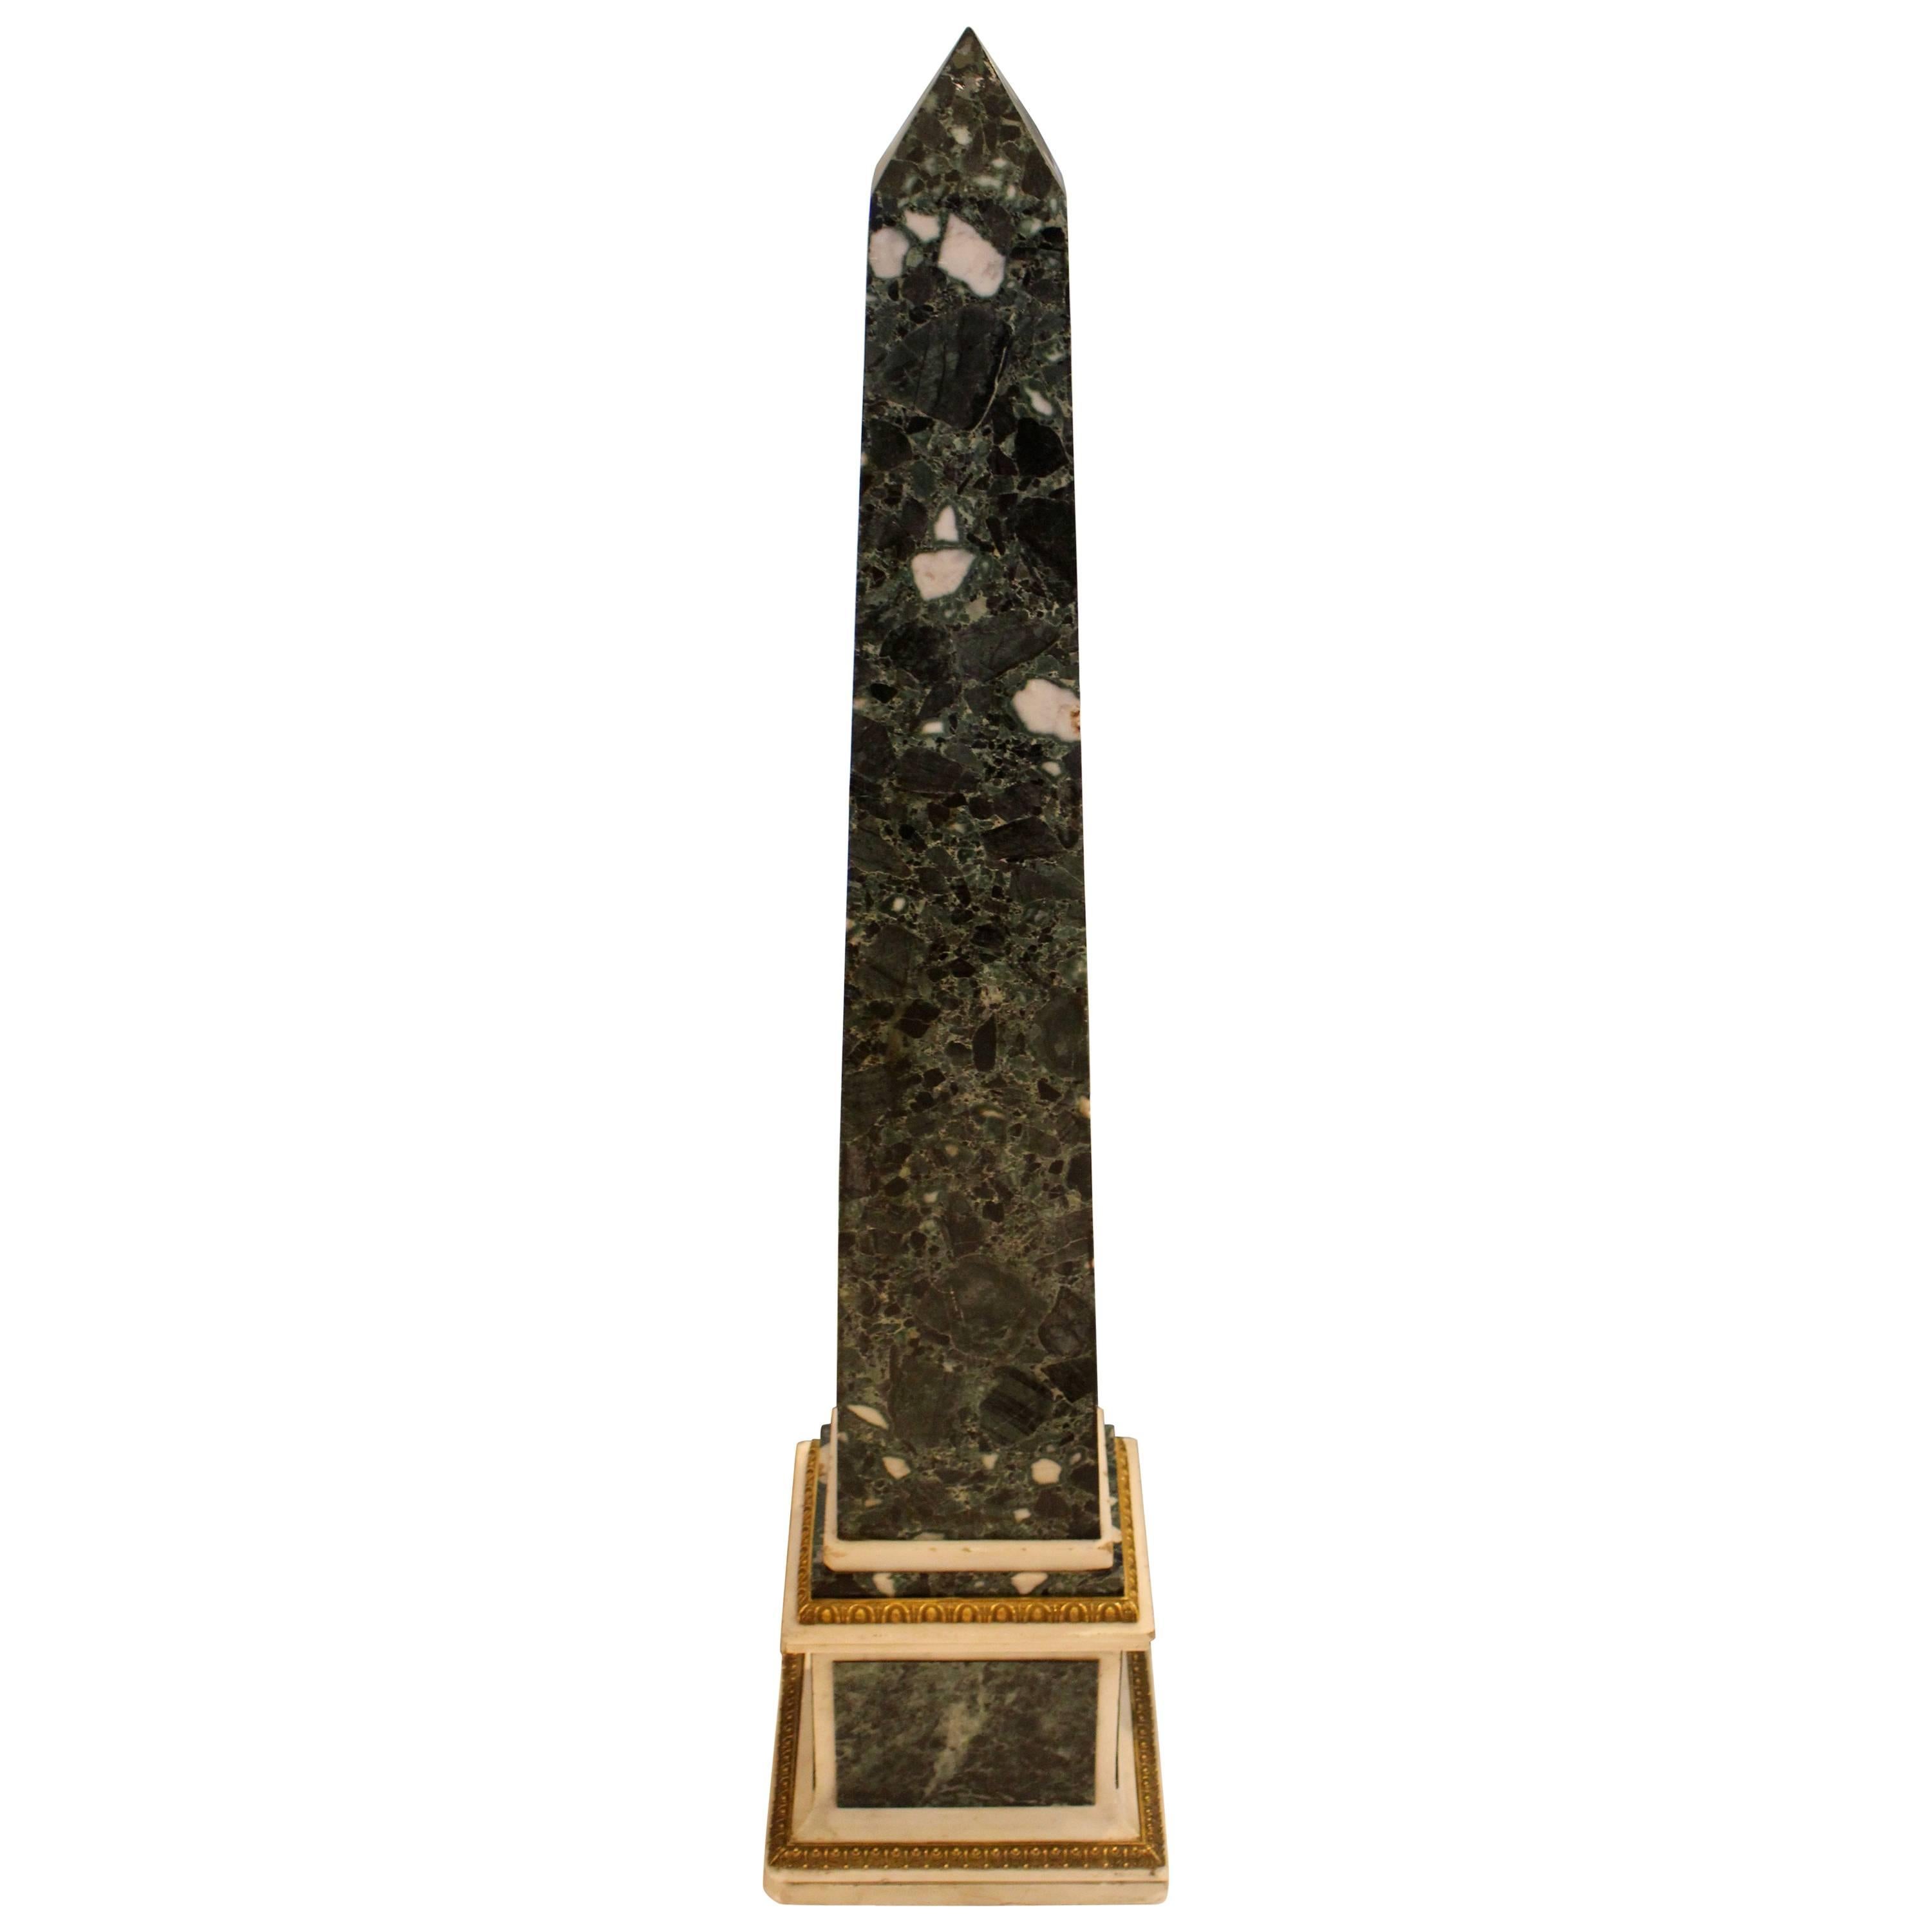 Italian Neoclassical Gilt Bronze-Mounted Verde Antico and White Marble Obelisk